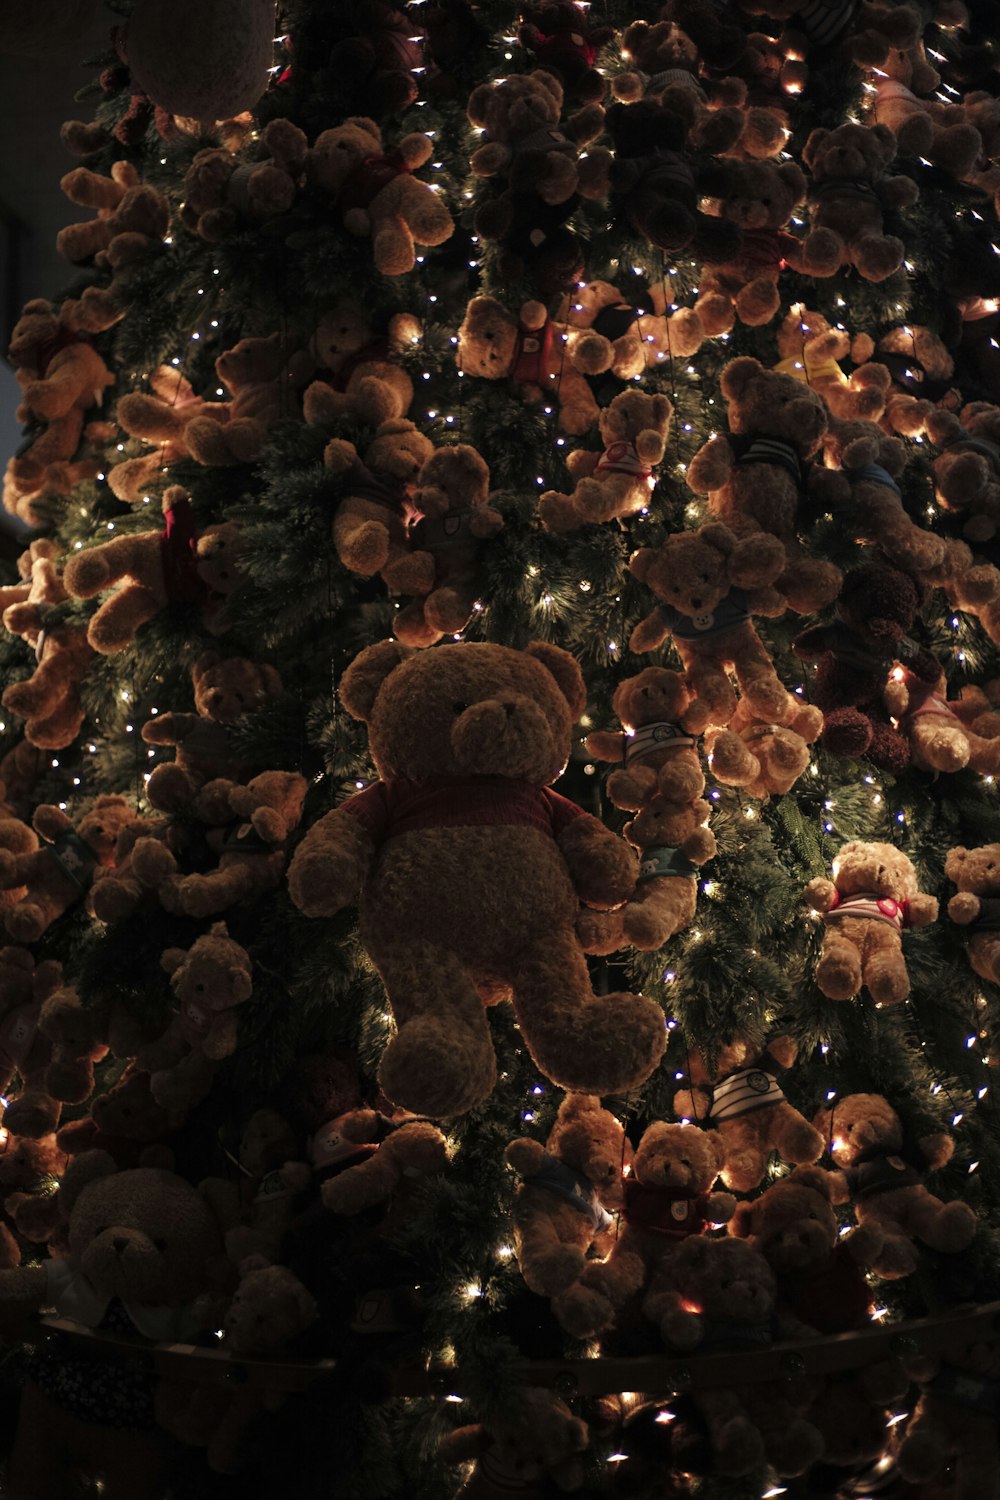 a teddy bear sitting on top of a christmas tree